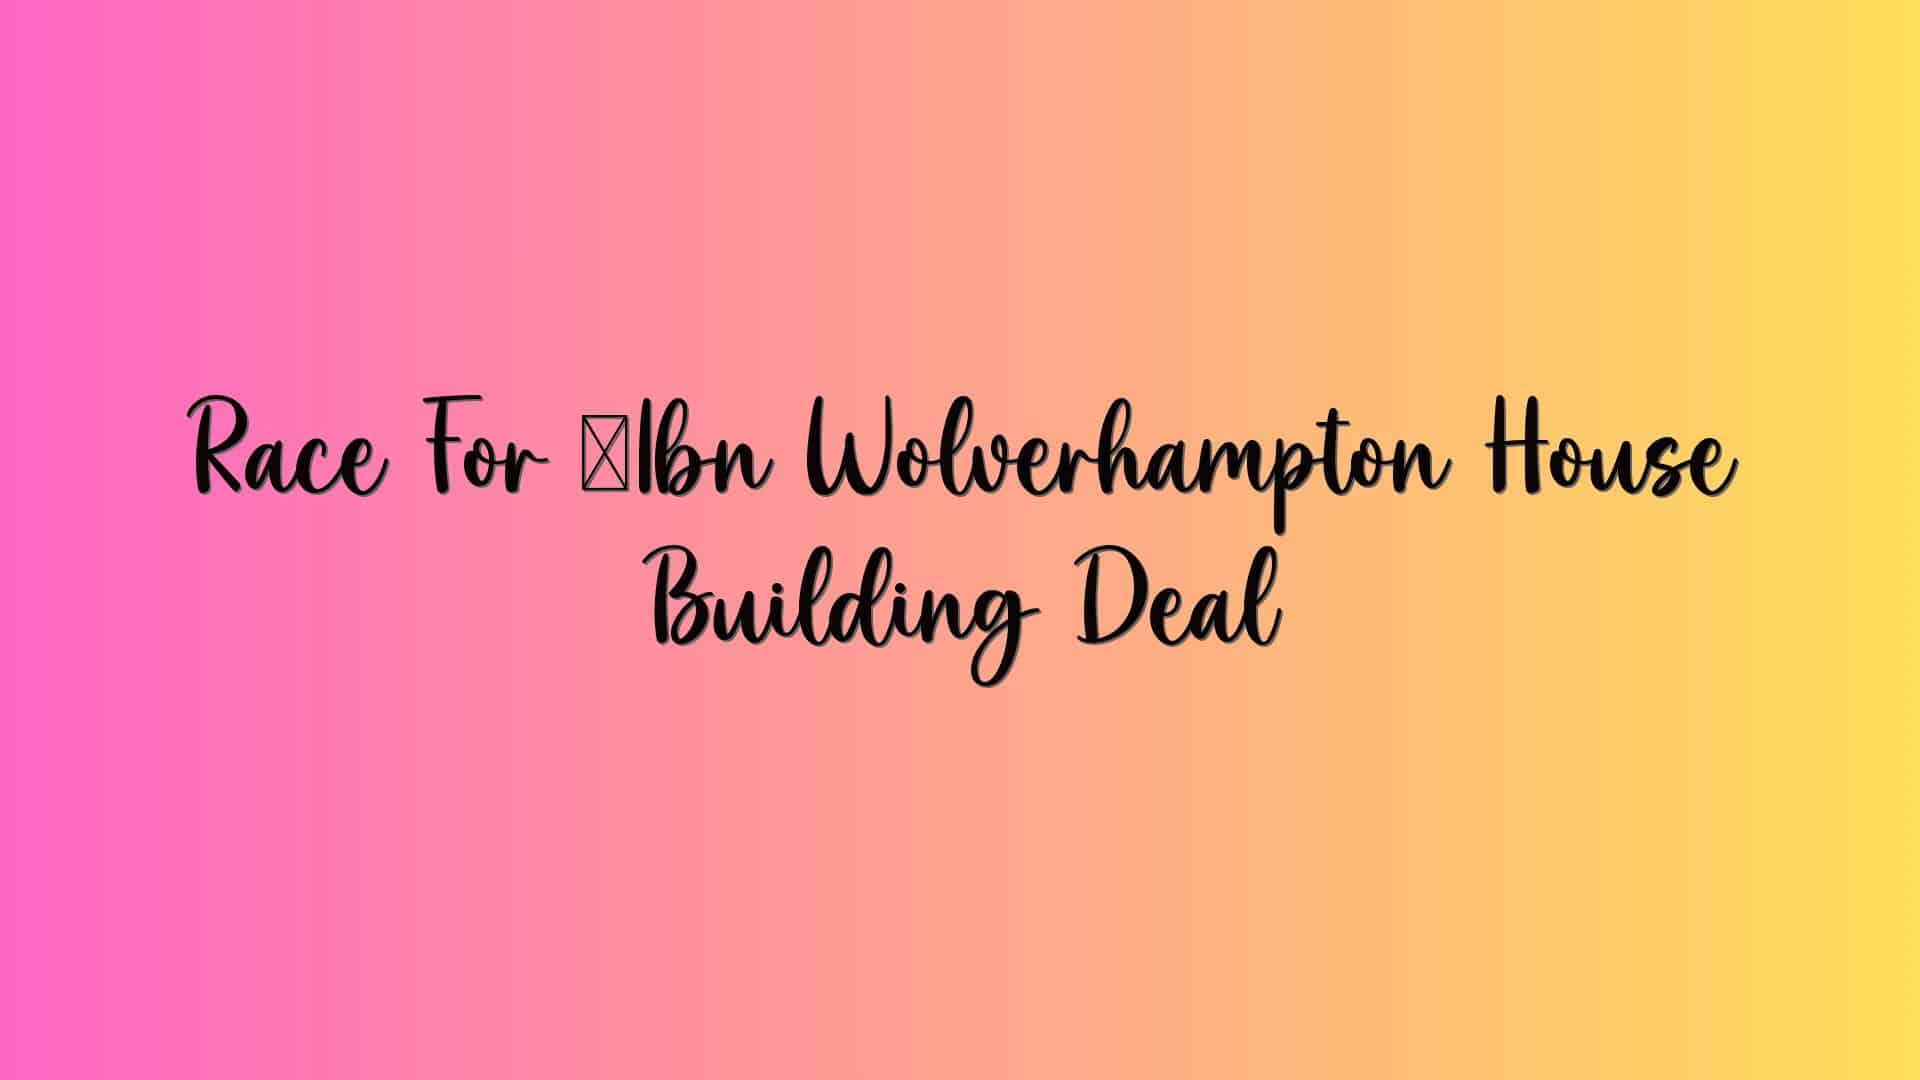 Race For £1bn Wolverhampton House Building Deal